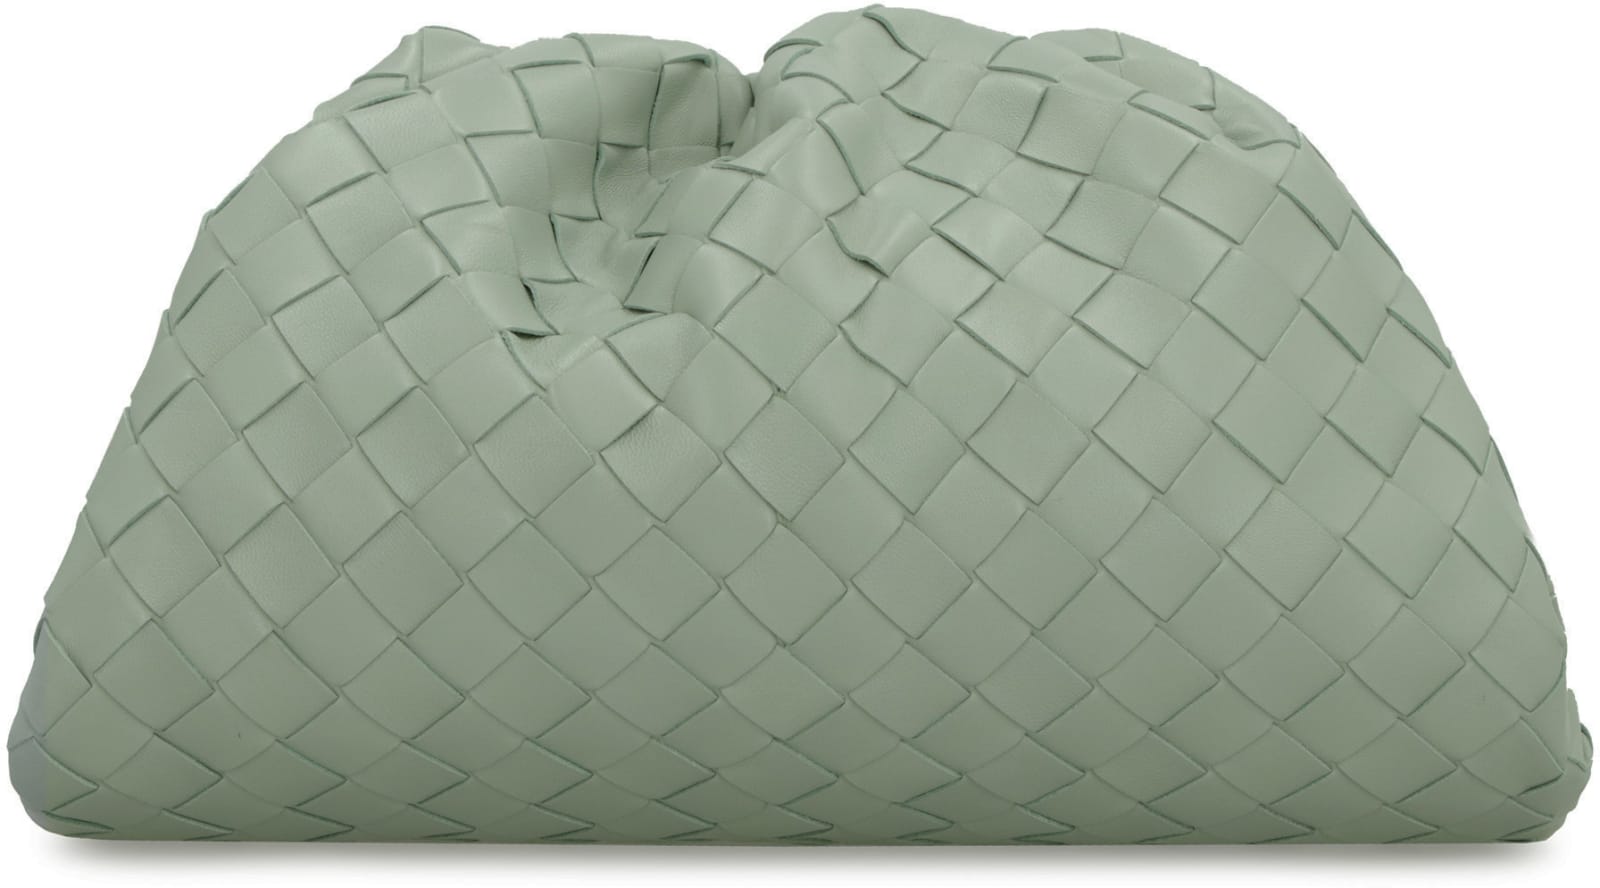 Bottega Veneta The Pouch clutch bag in dark green – 303 Other